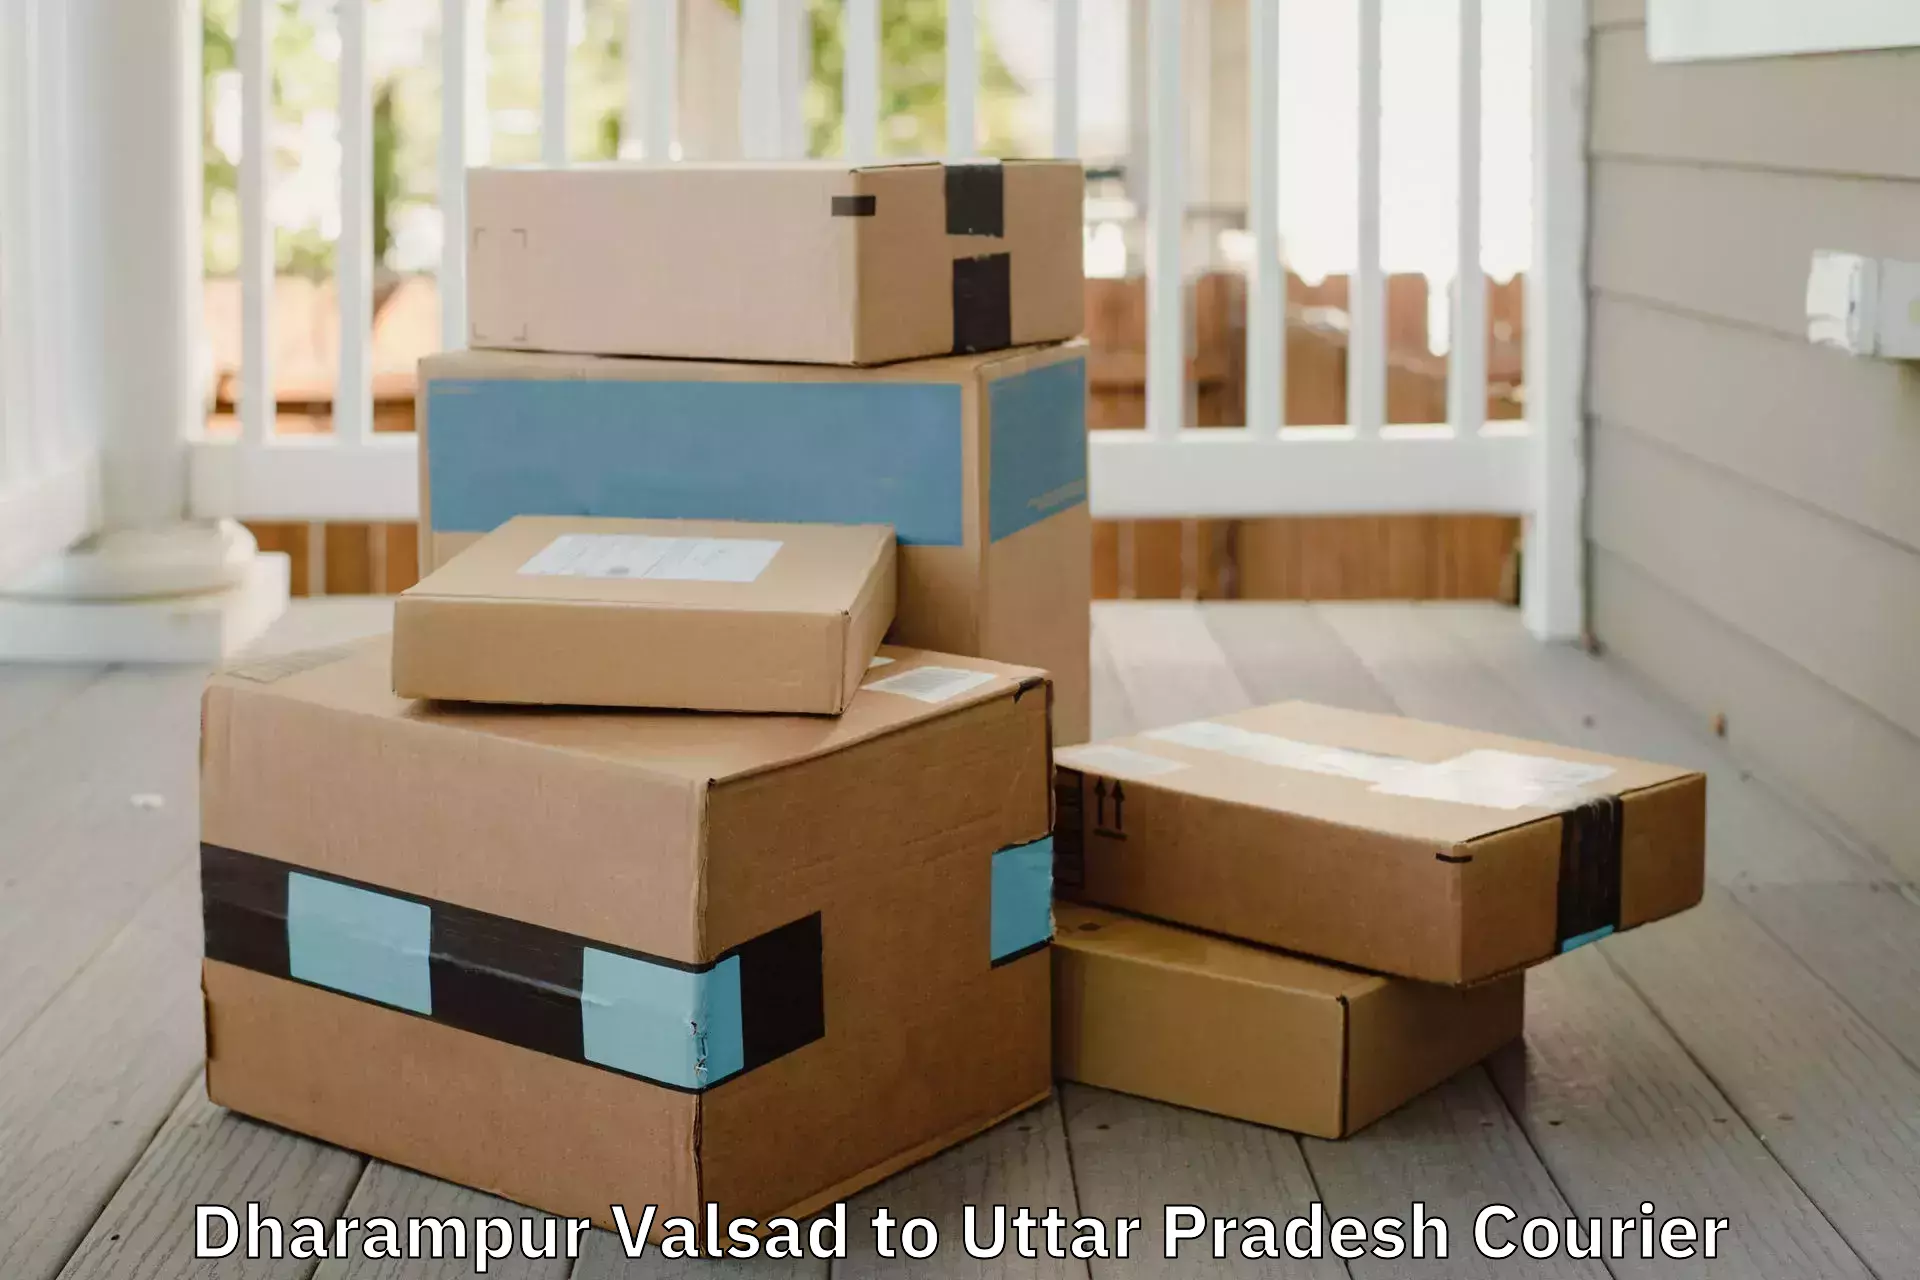 Professional moving company Dharampur Valsad to Ambedkar Nagar